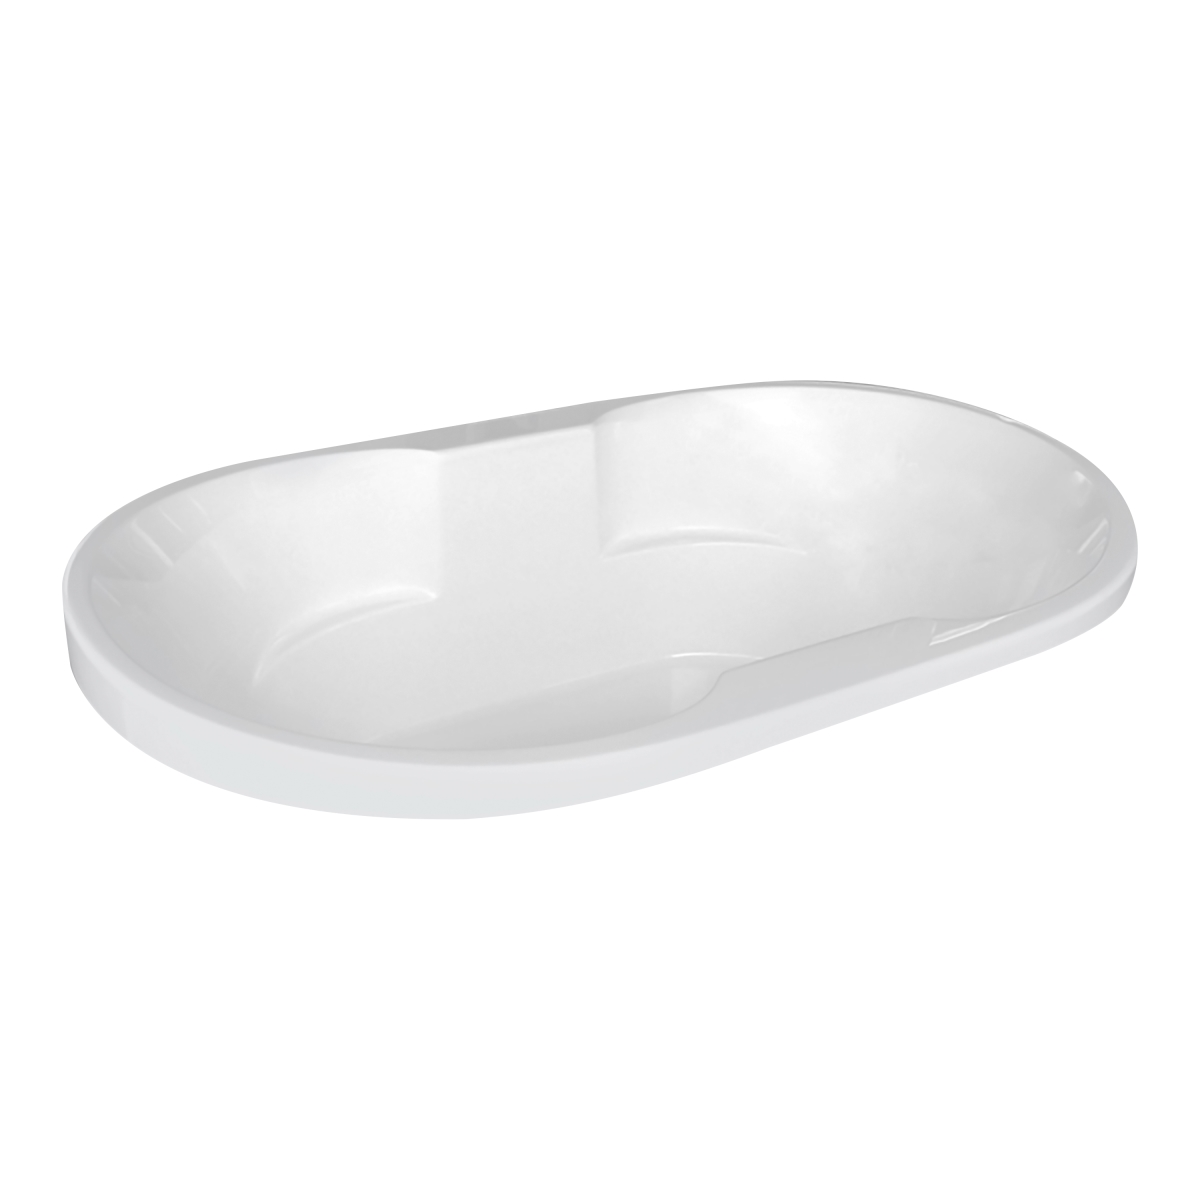 Neptune6642diwht 66 X 42 In. Contemporary Oval Acrylic Contoured Drop-in Bath Tub, White